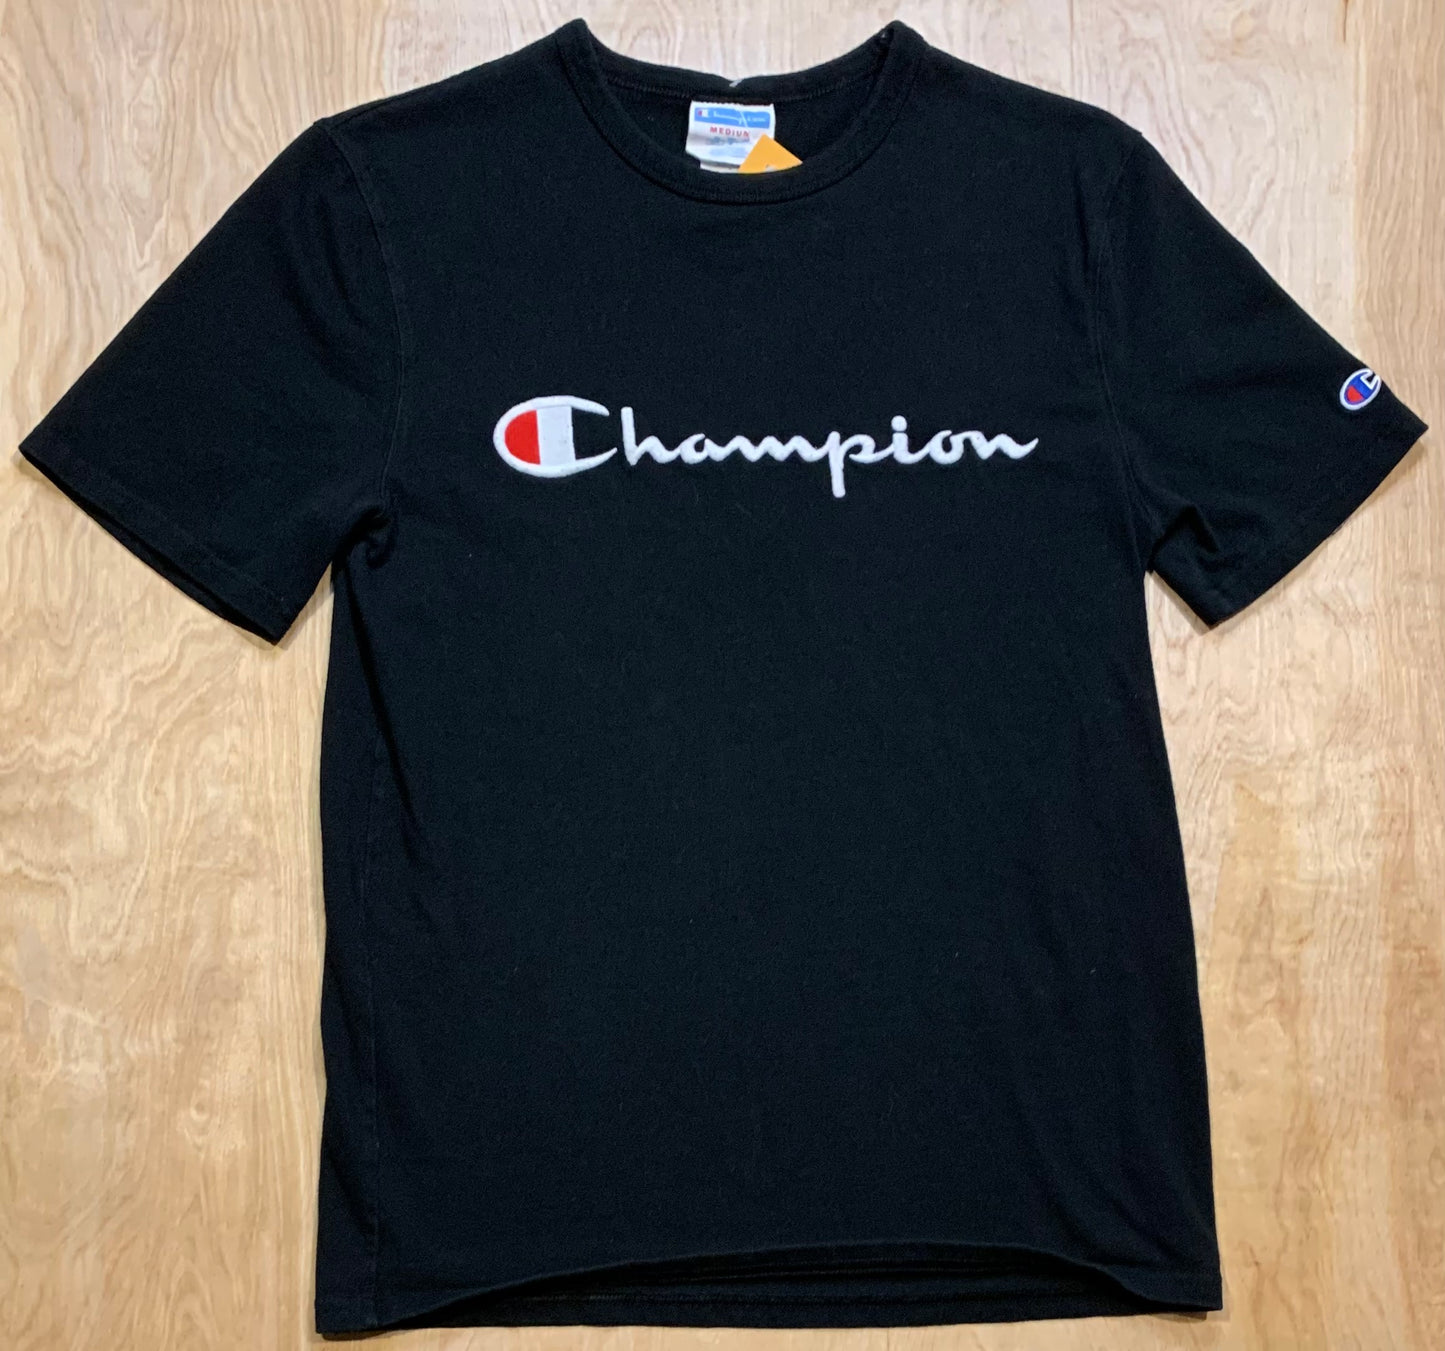 Vintage Stitched Champion T-Shirt